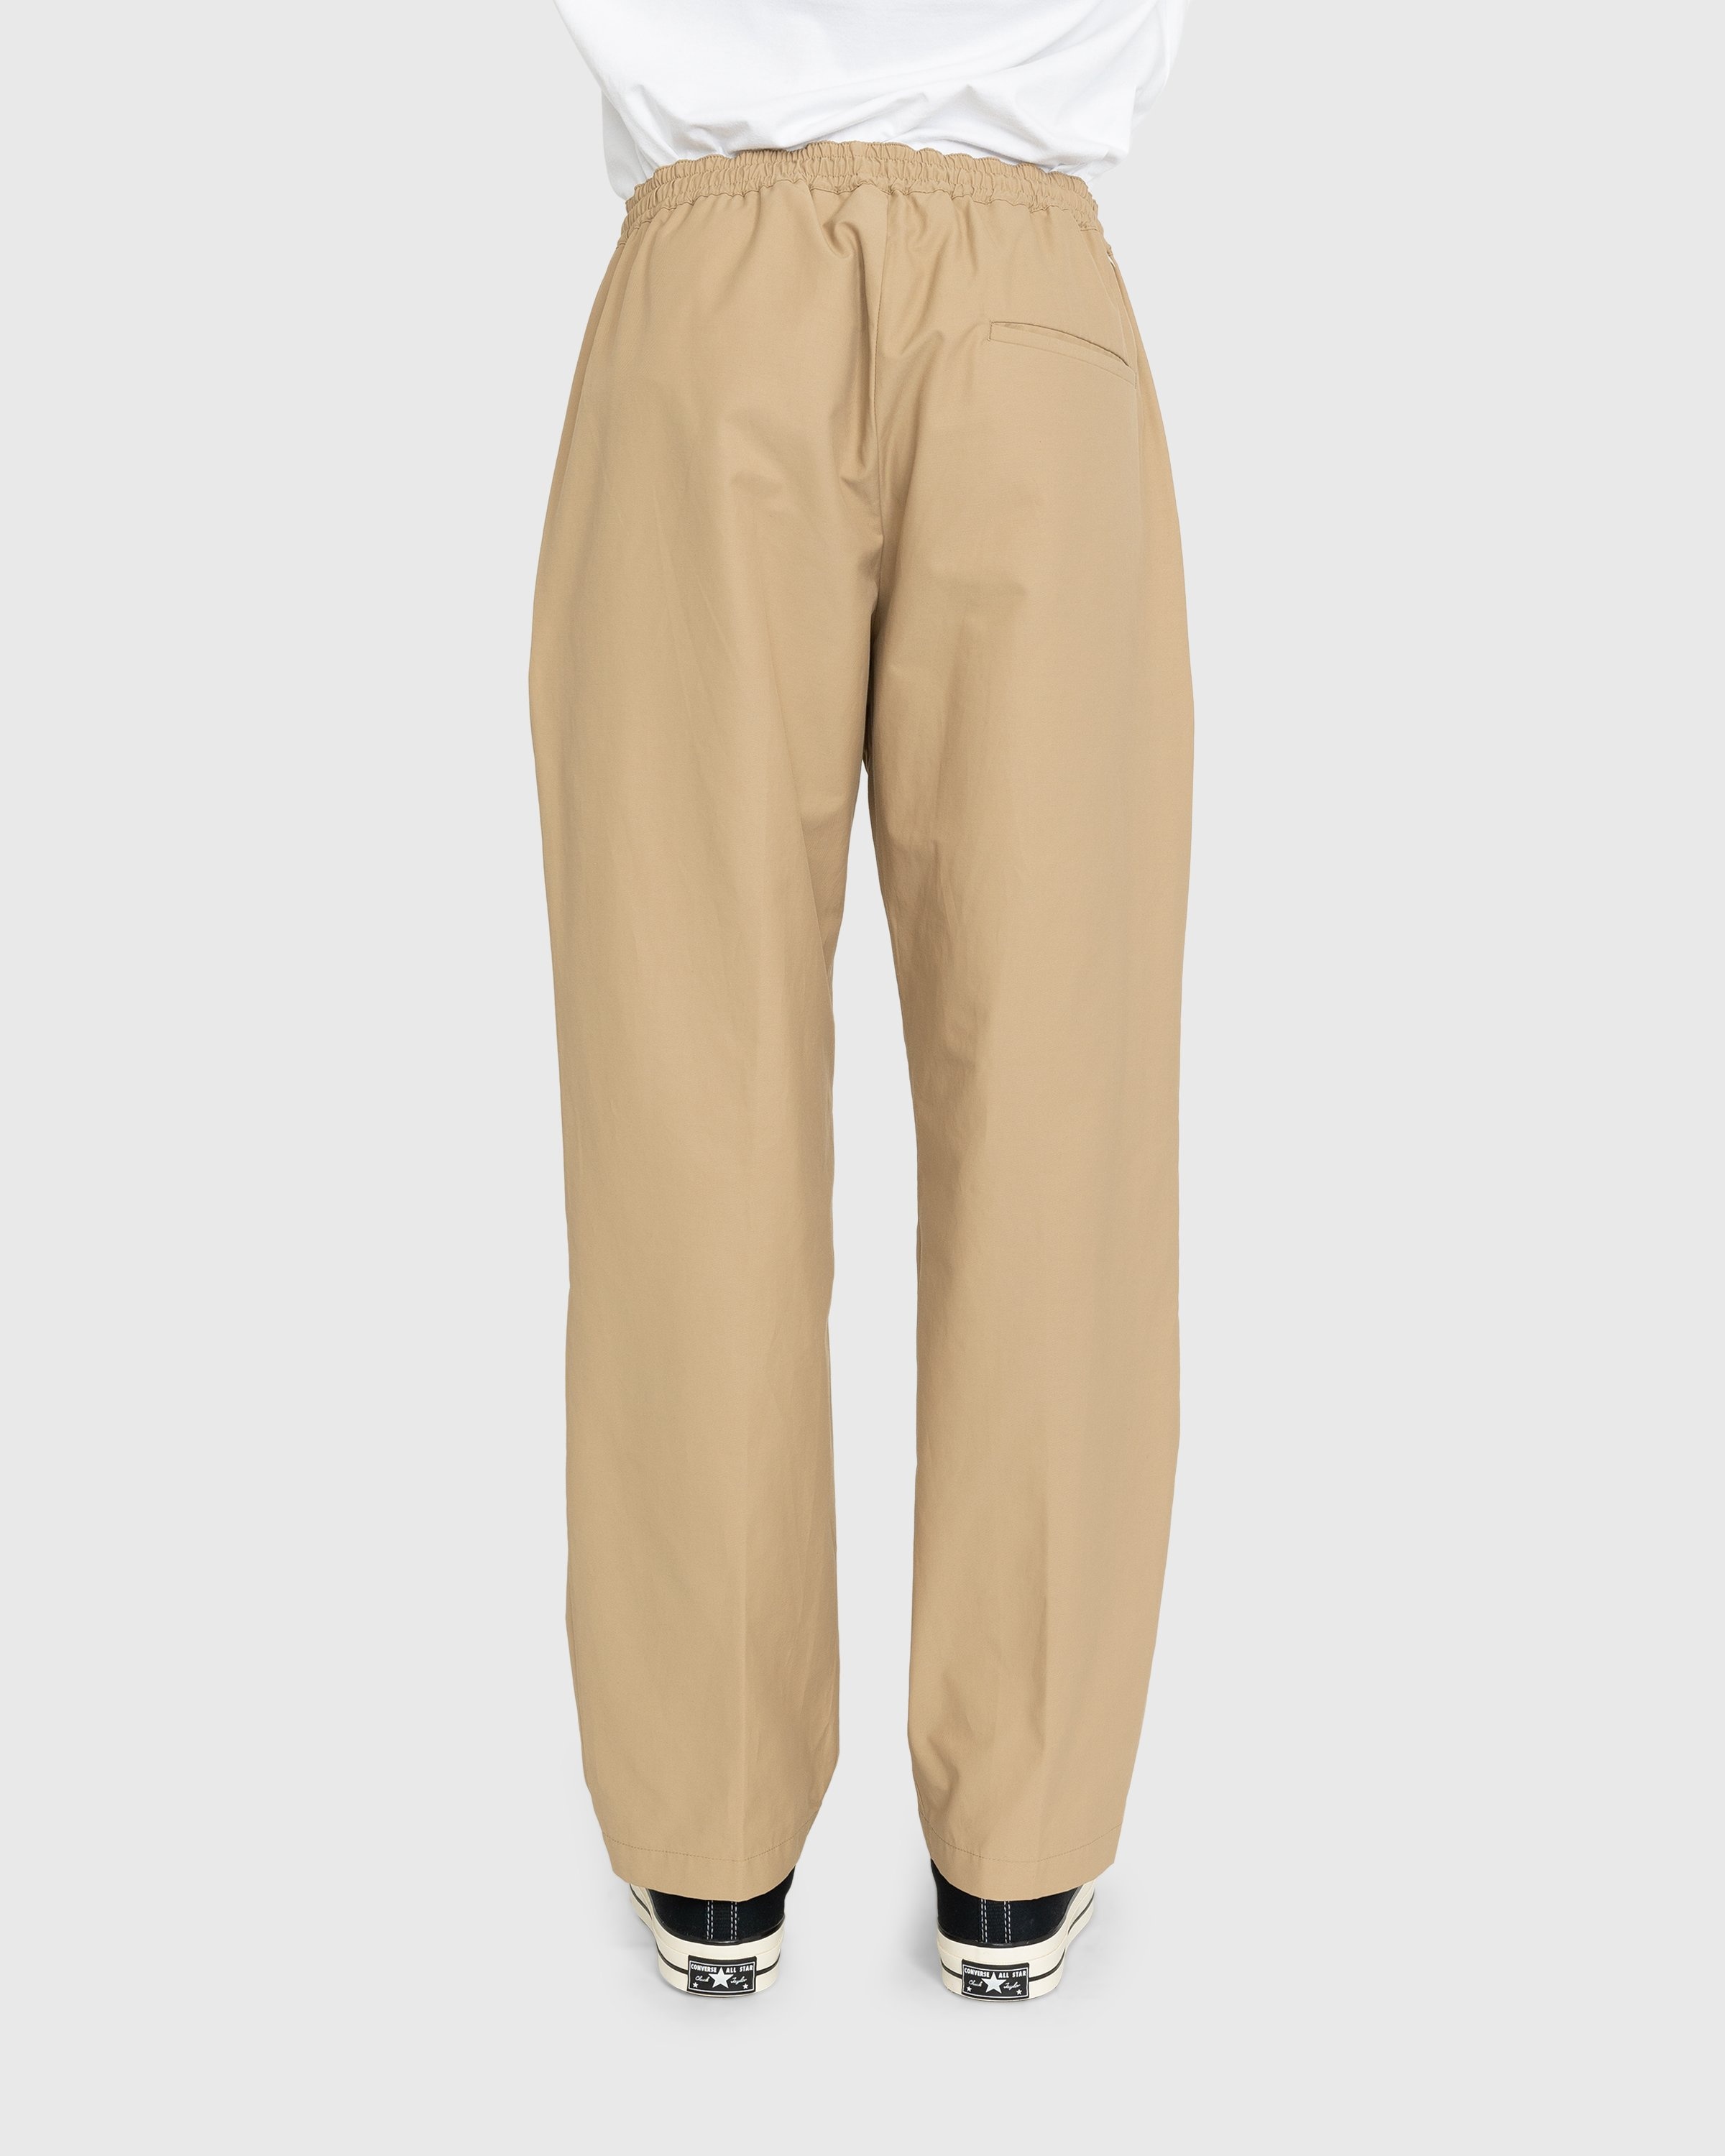 Highsnobiety – Cotton Nylon Elastic Pants Beige - Trousers - Beige - Image 4